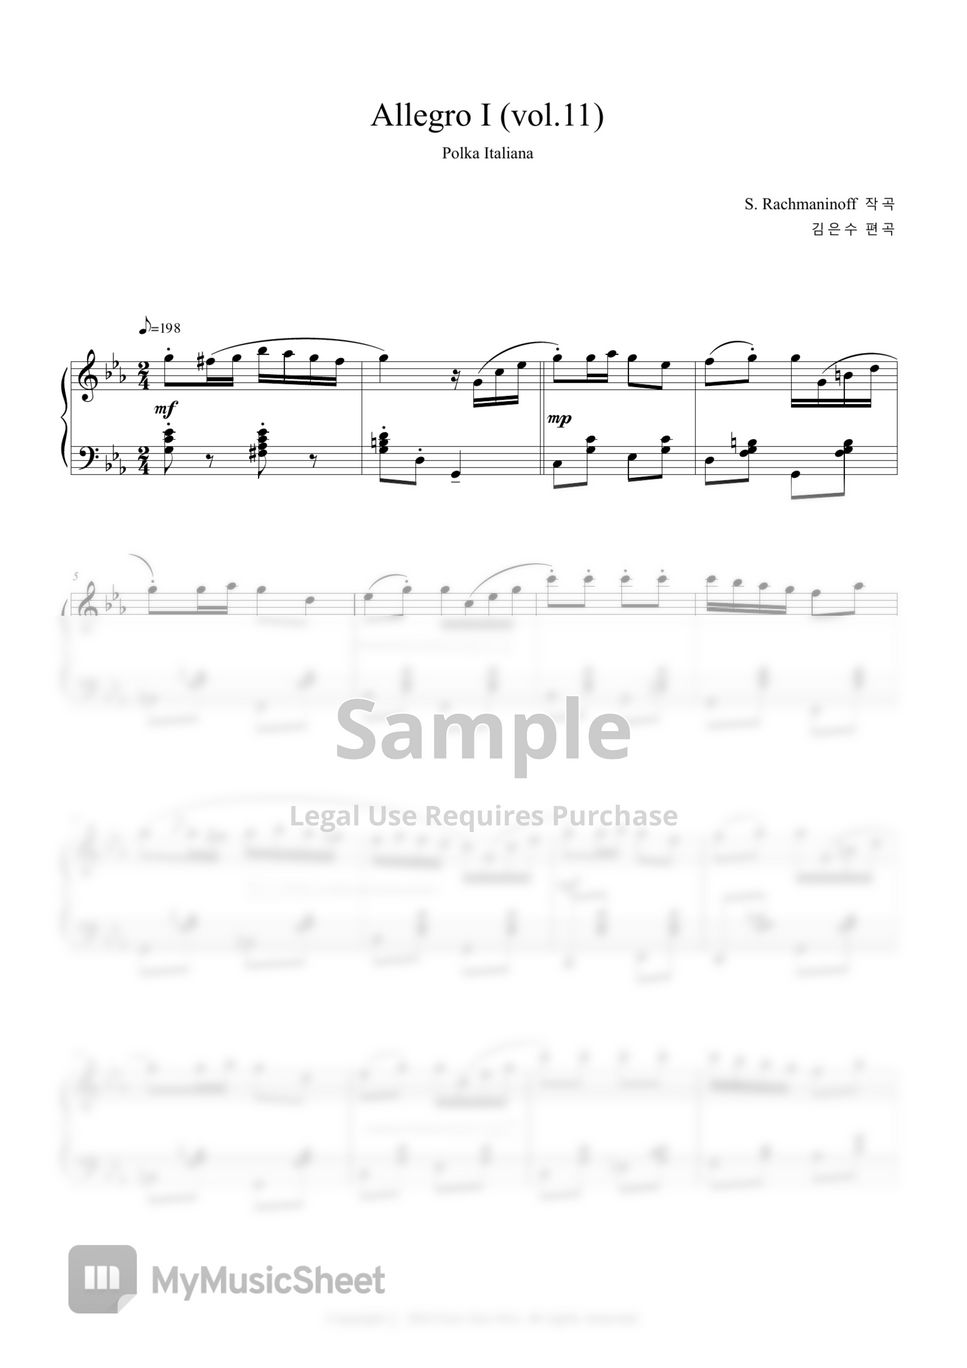 S. Rachmaninoff - Allegro Ⅰ (vol.11) (ballet Class Music) by Eun Soo Kim